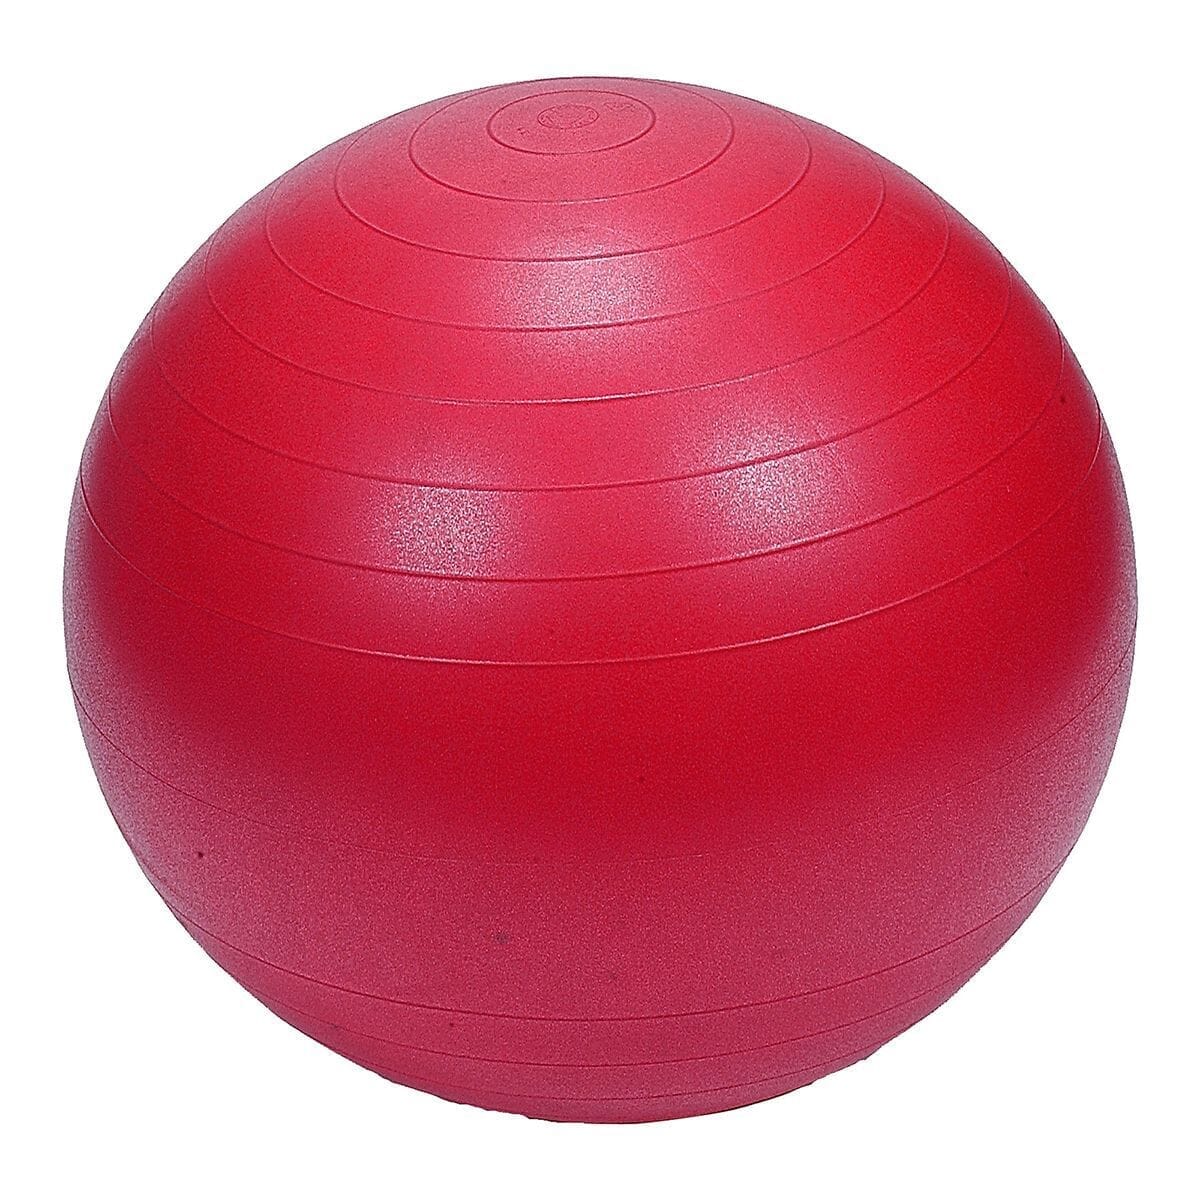 View Gym Balls Red 1200mm information